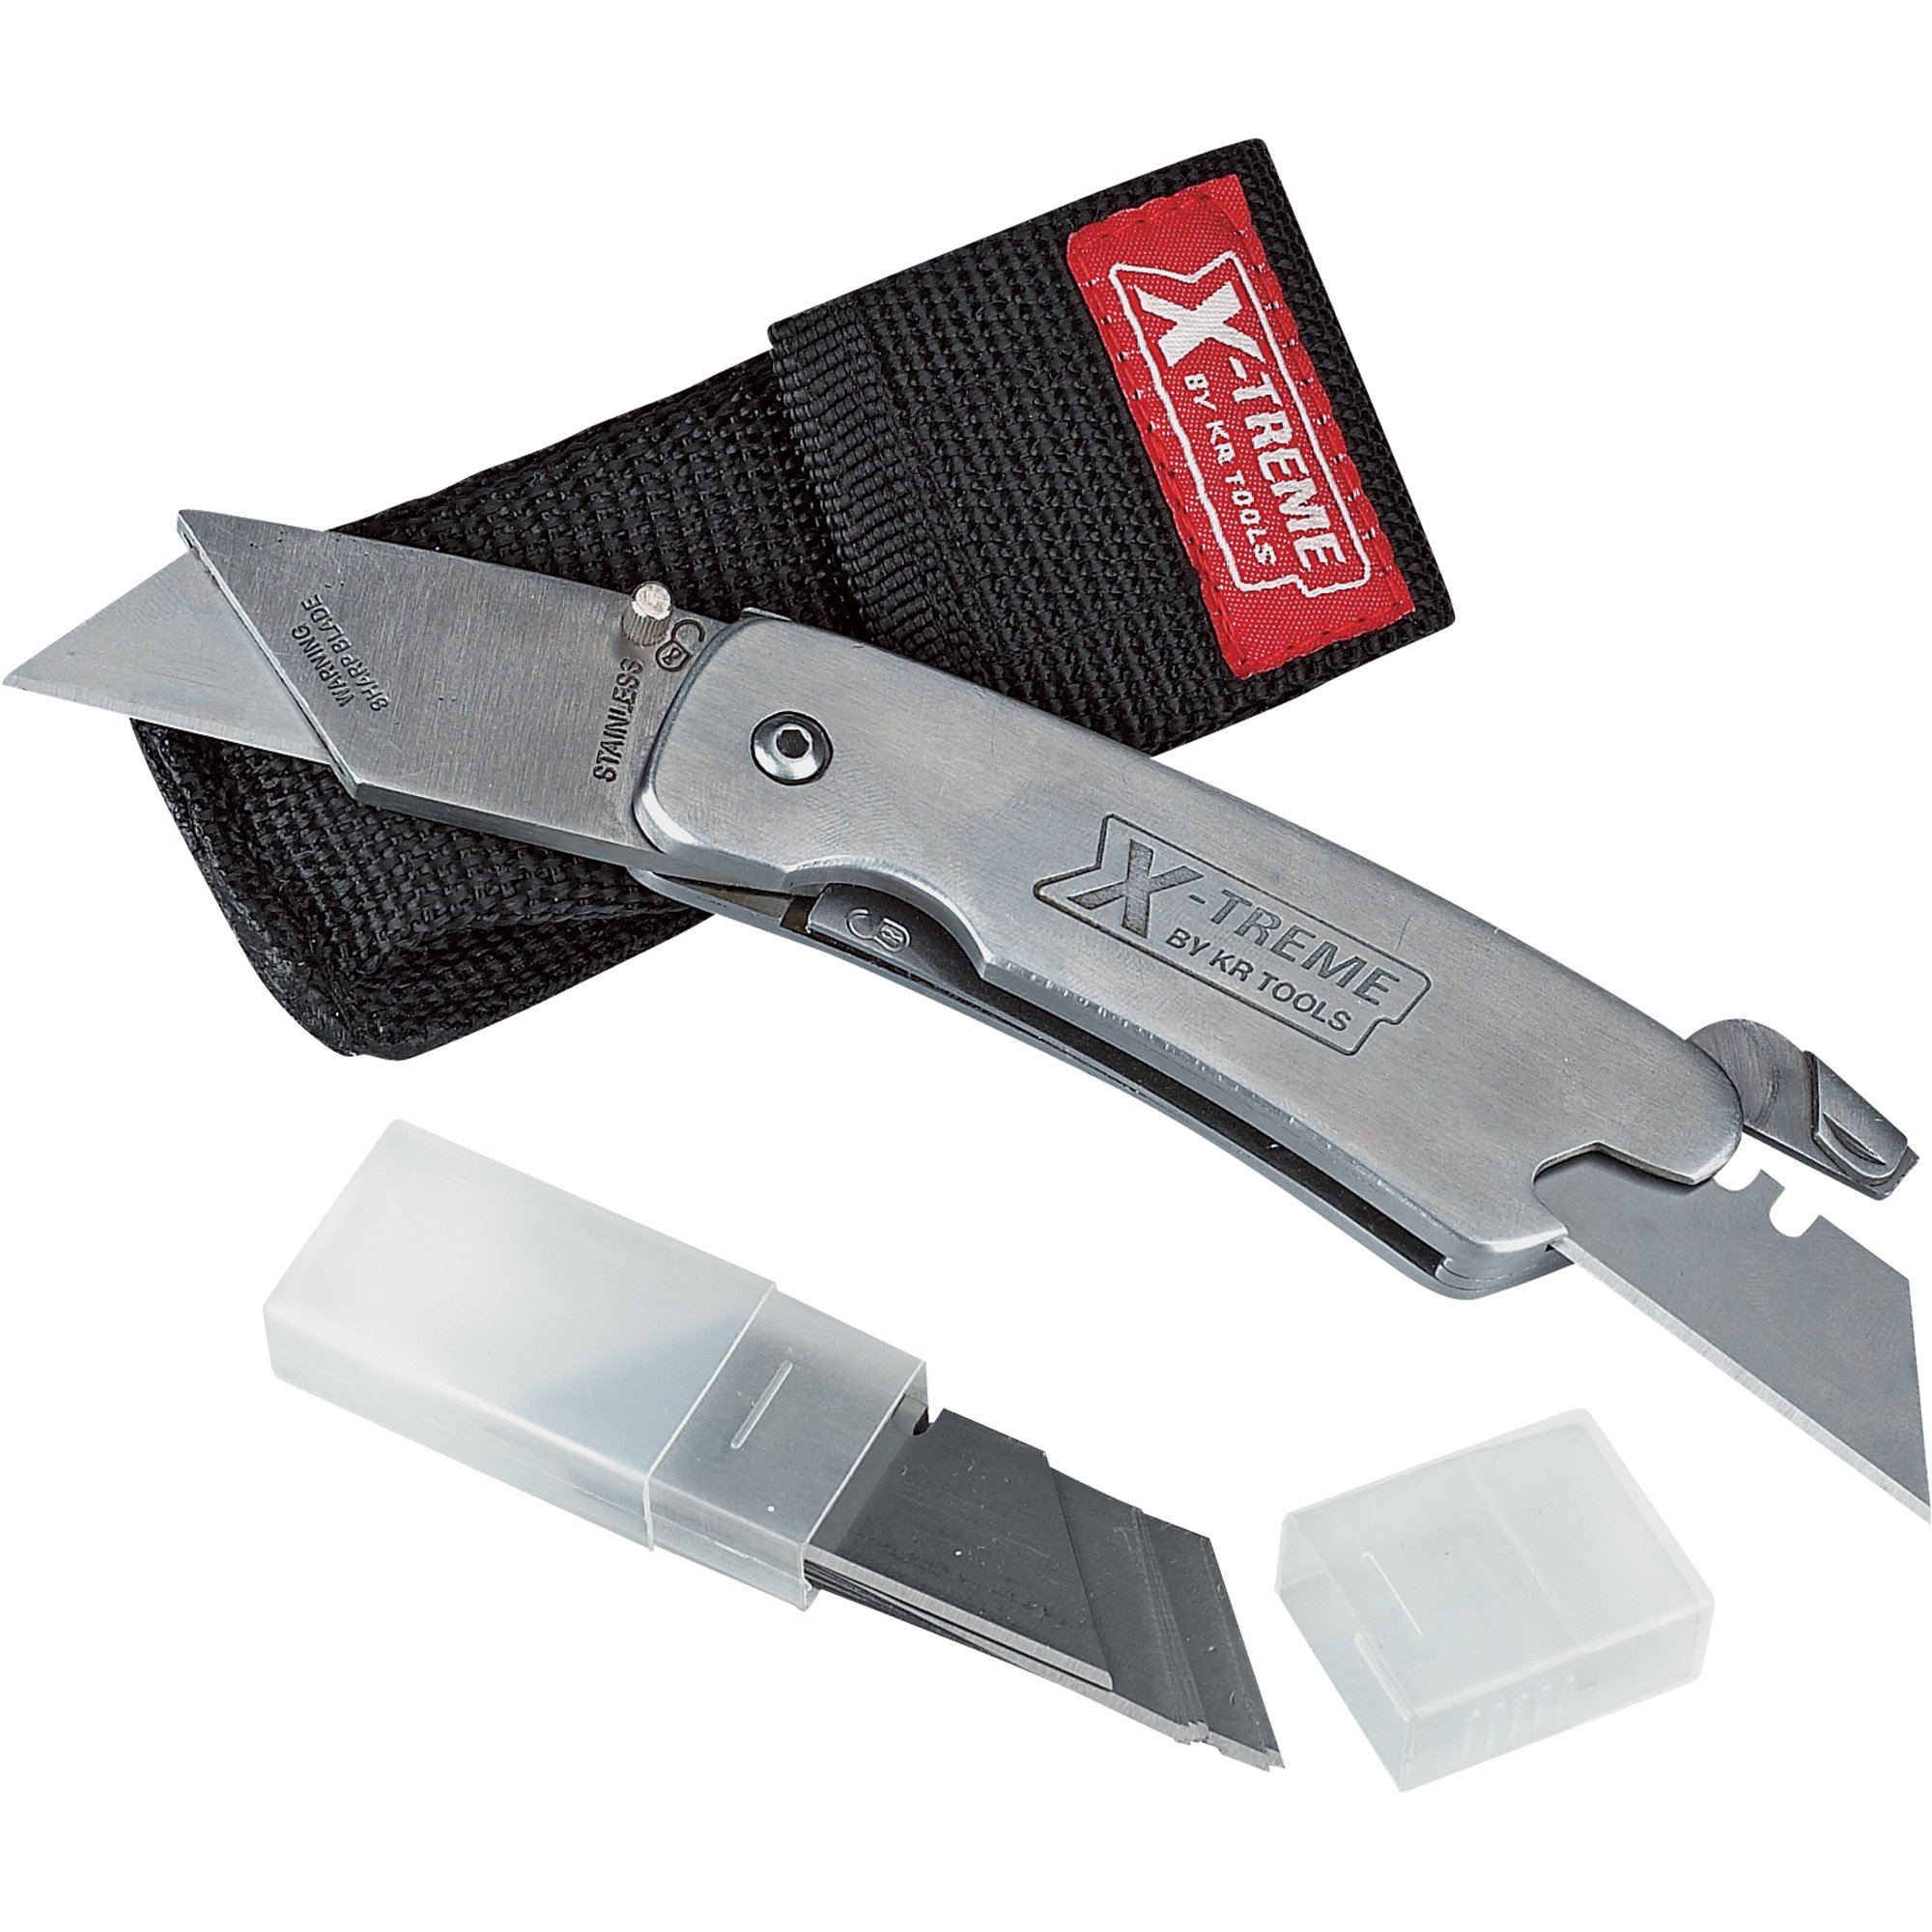 Folding Utility Knife & Blades